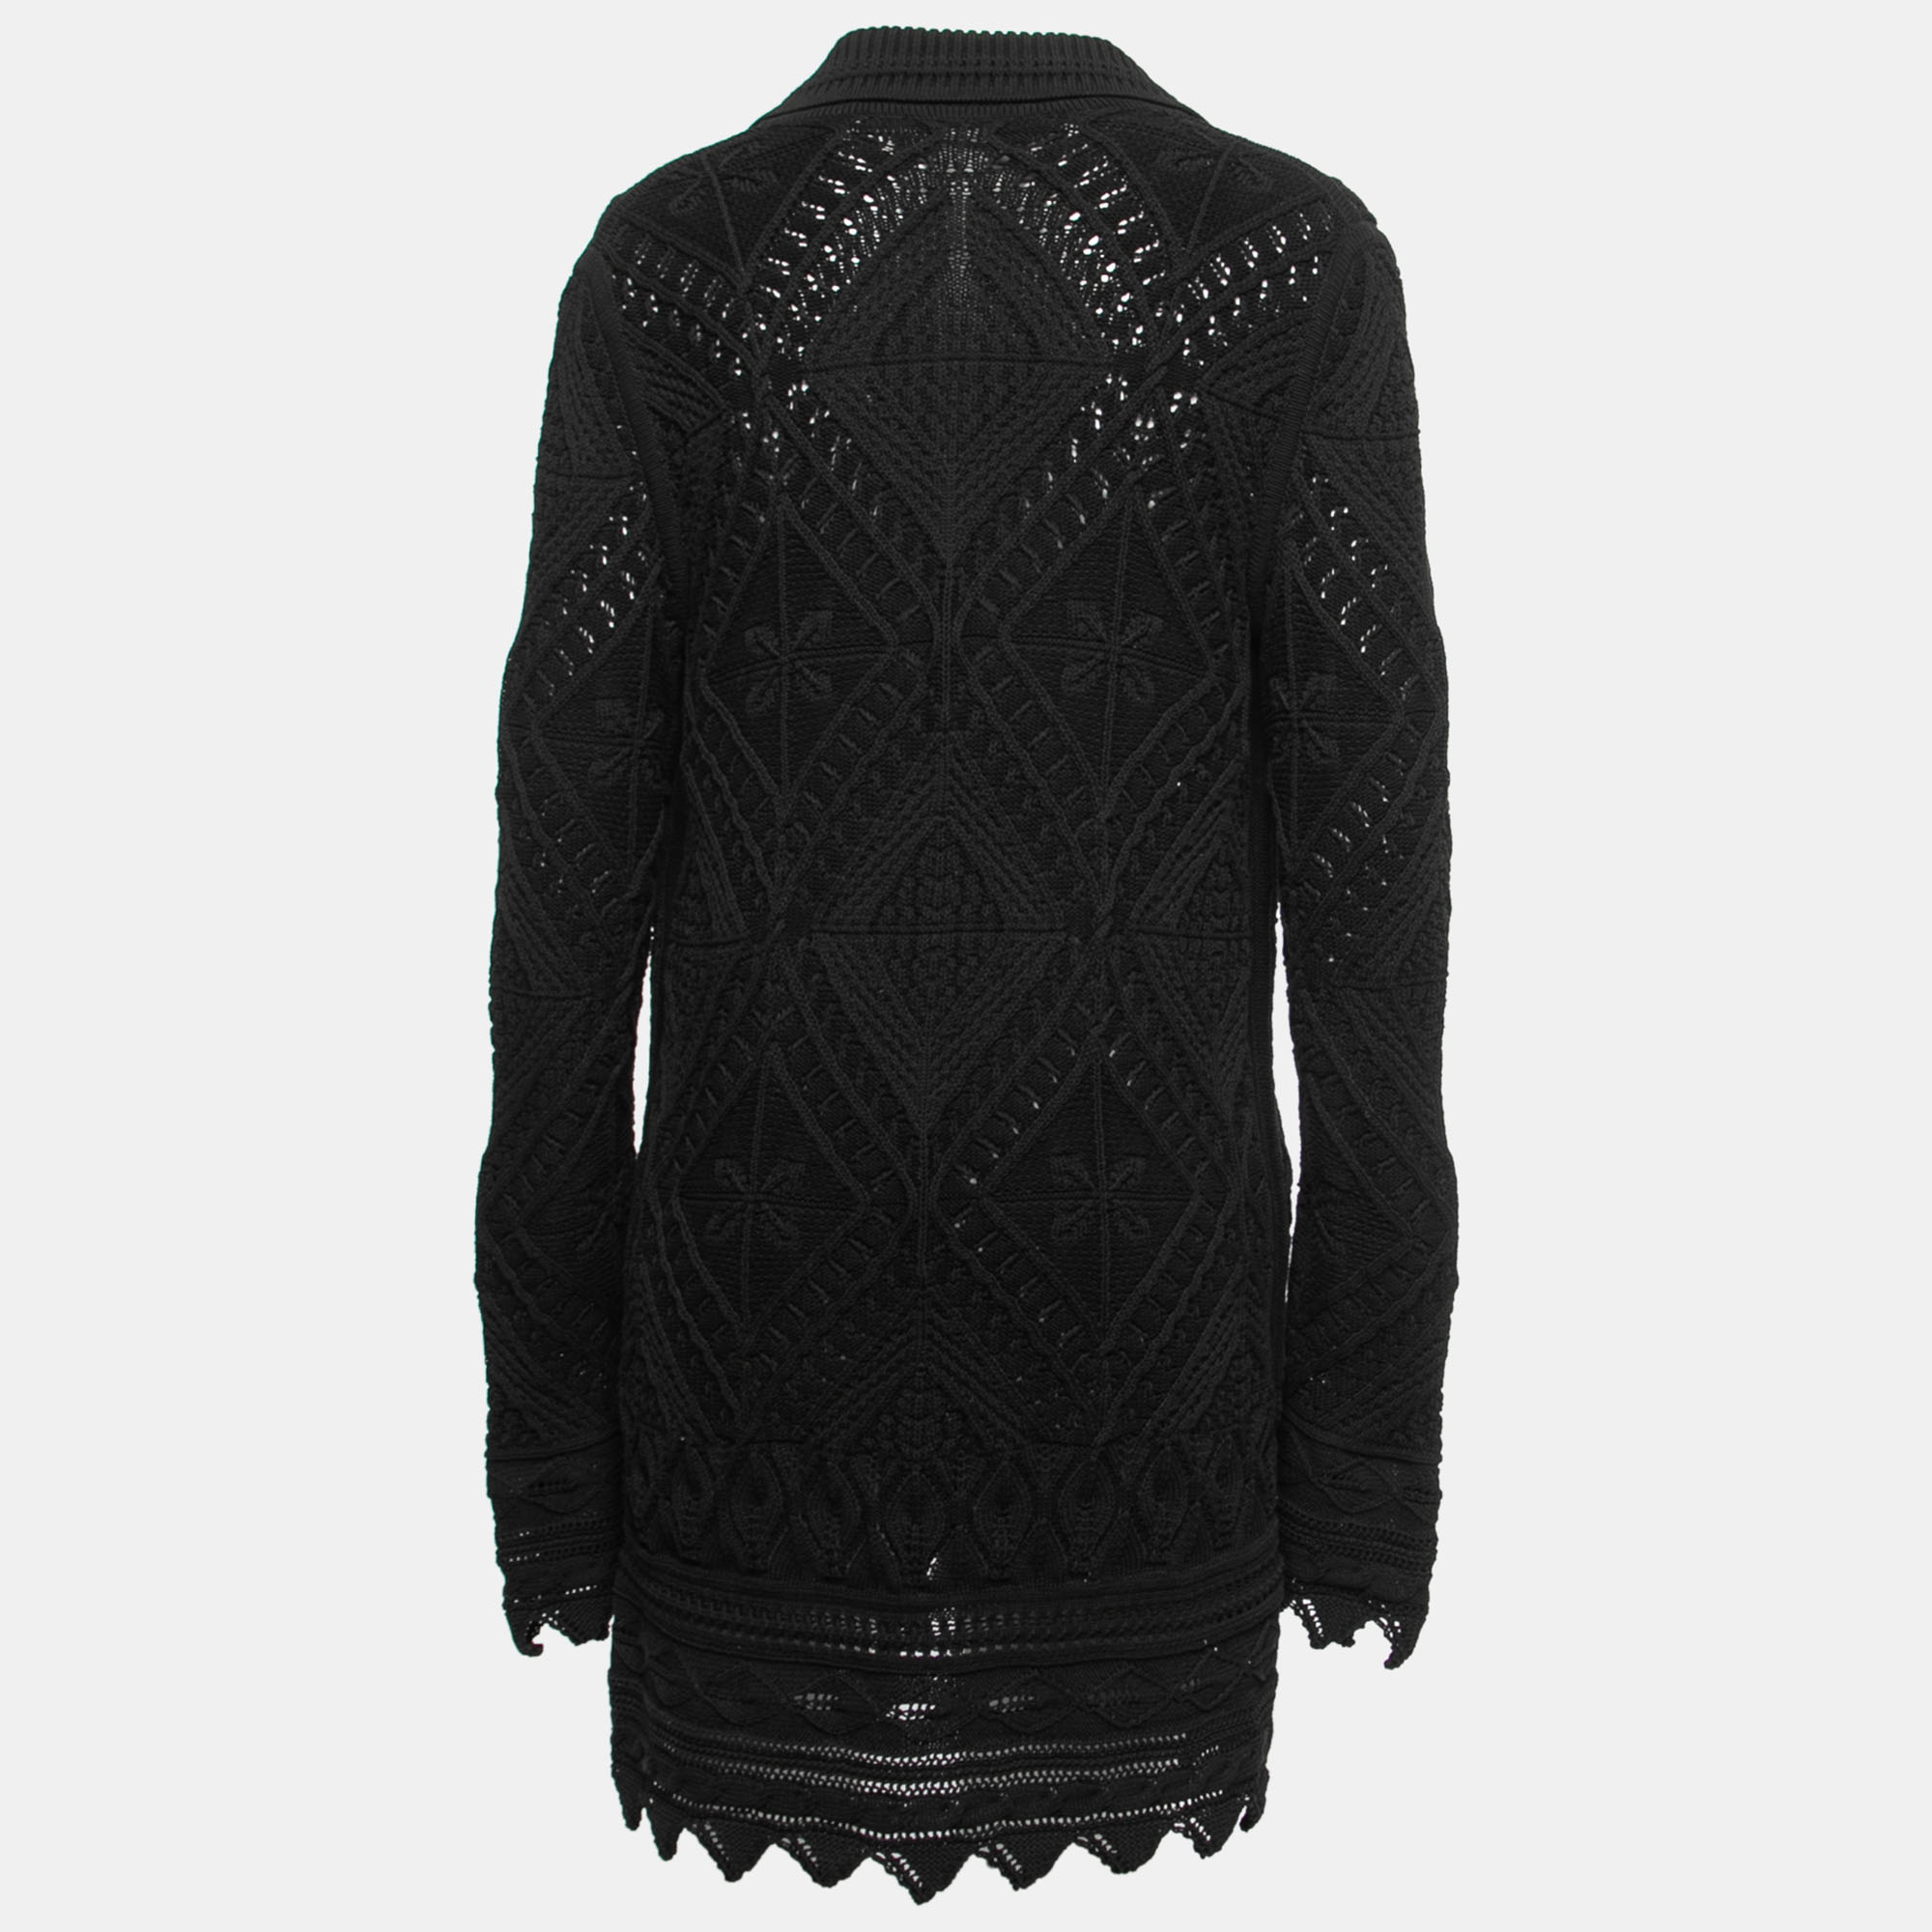 

Chanel Black Crochet Knit Collared Cardigan